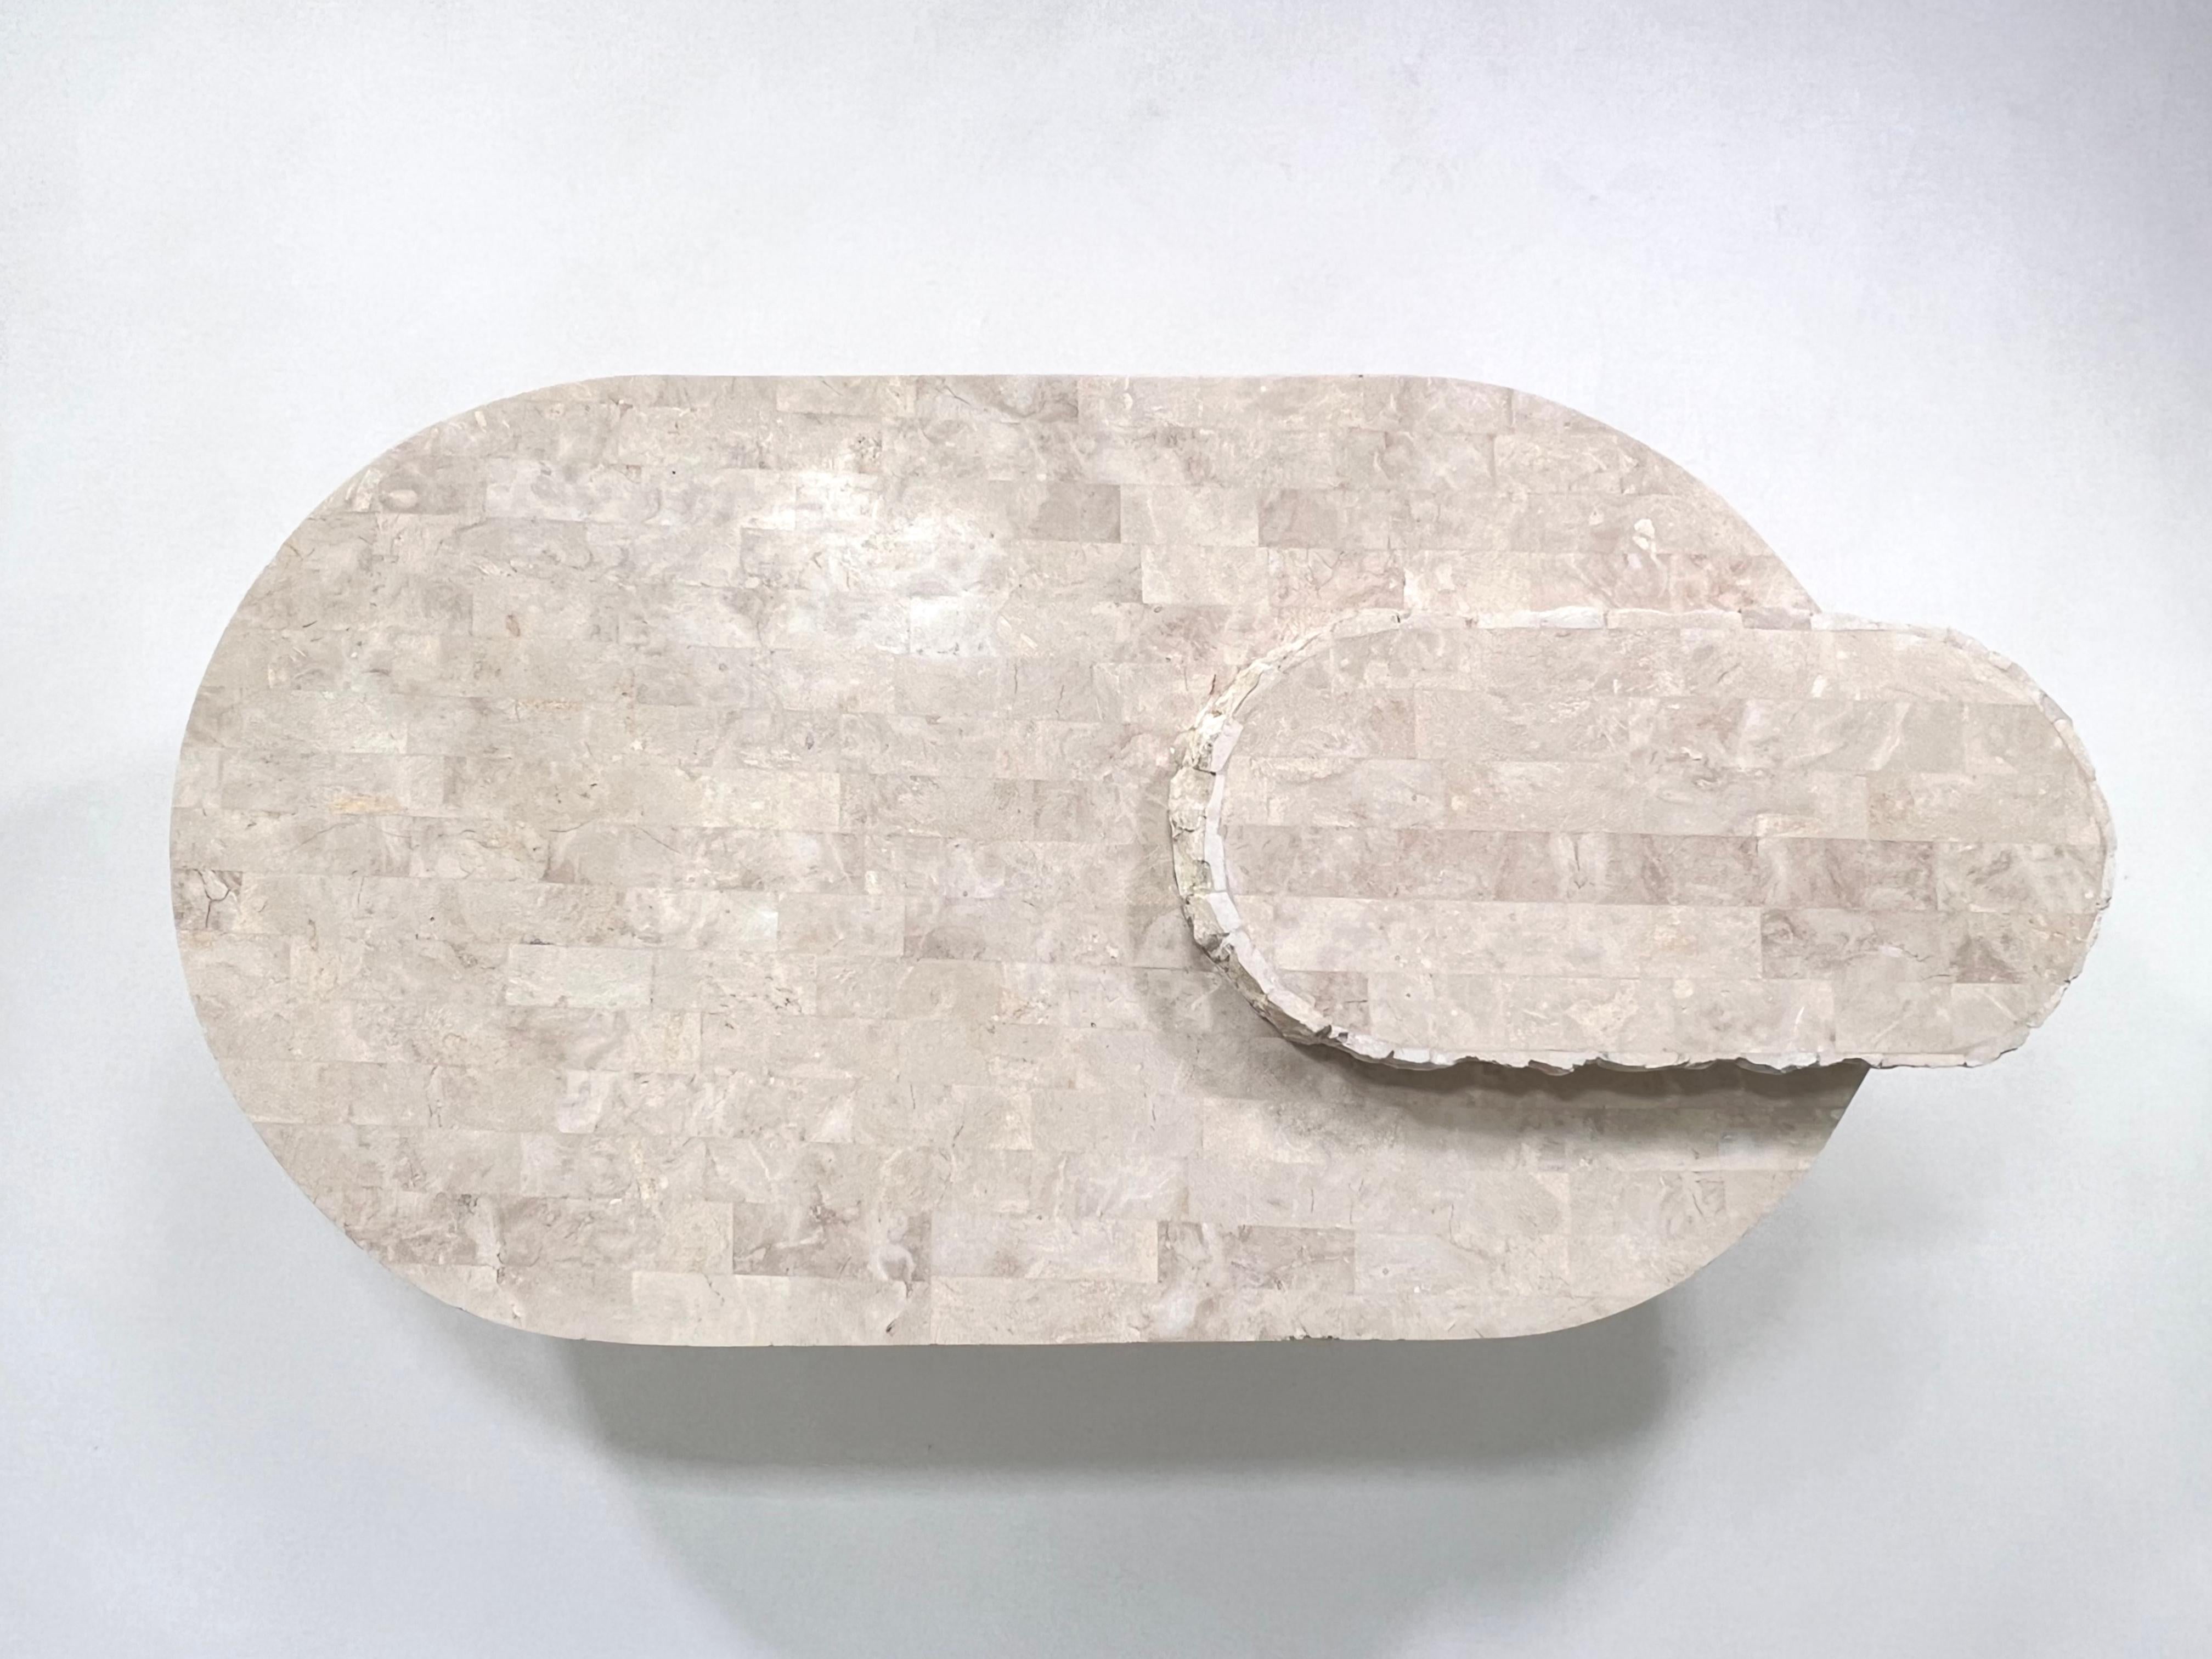 tessellated stone coffee table